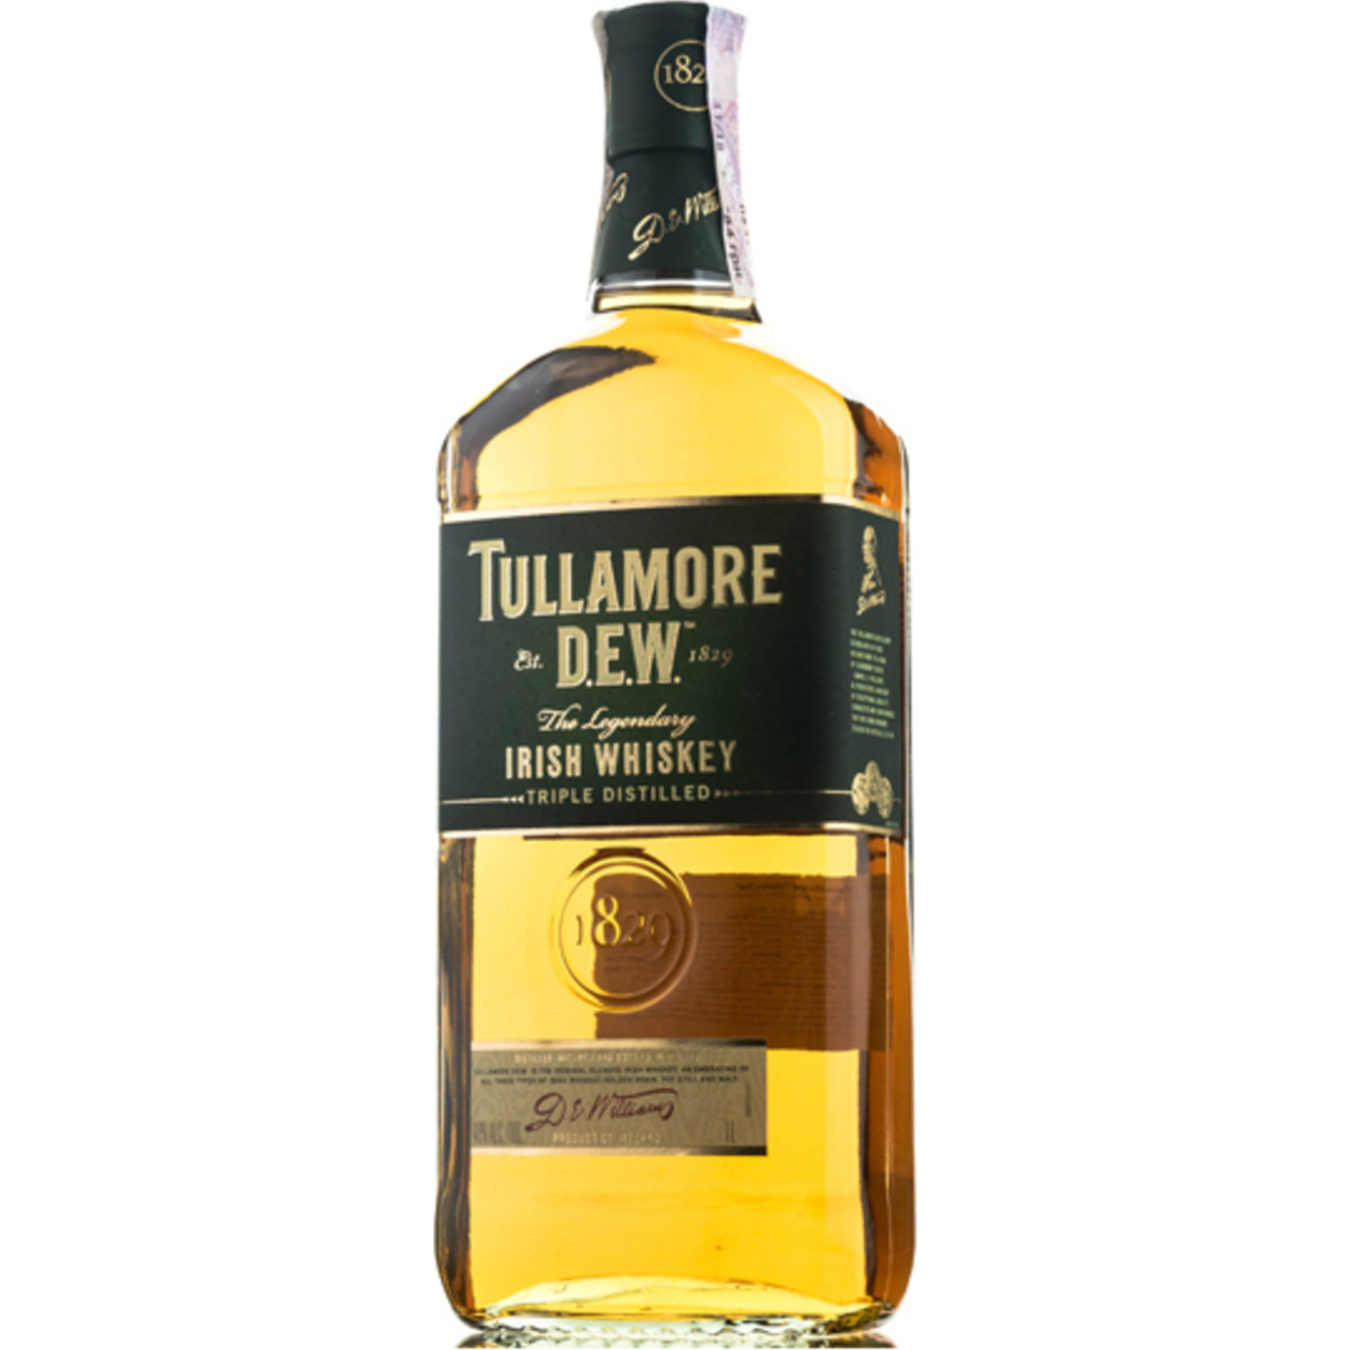 Виски Tullamore Dew Original 40% 1л